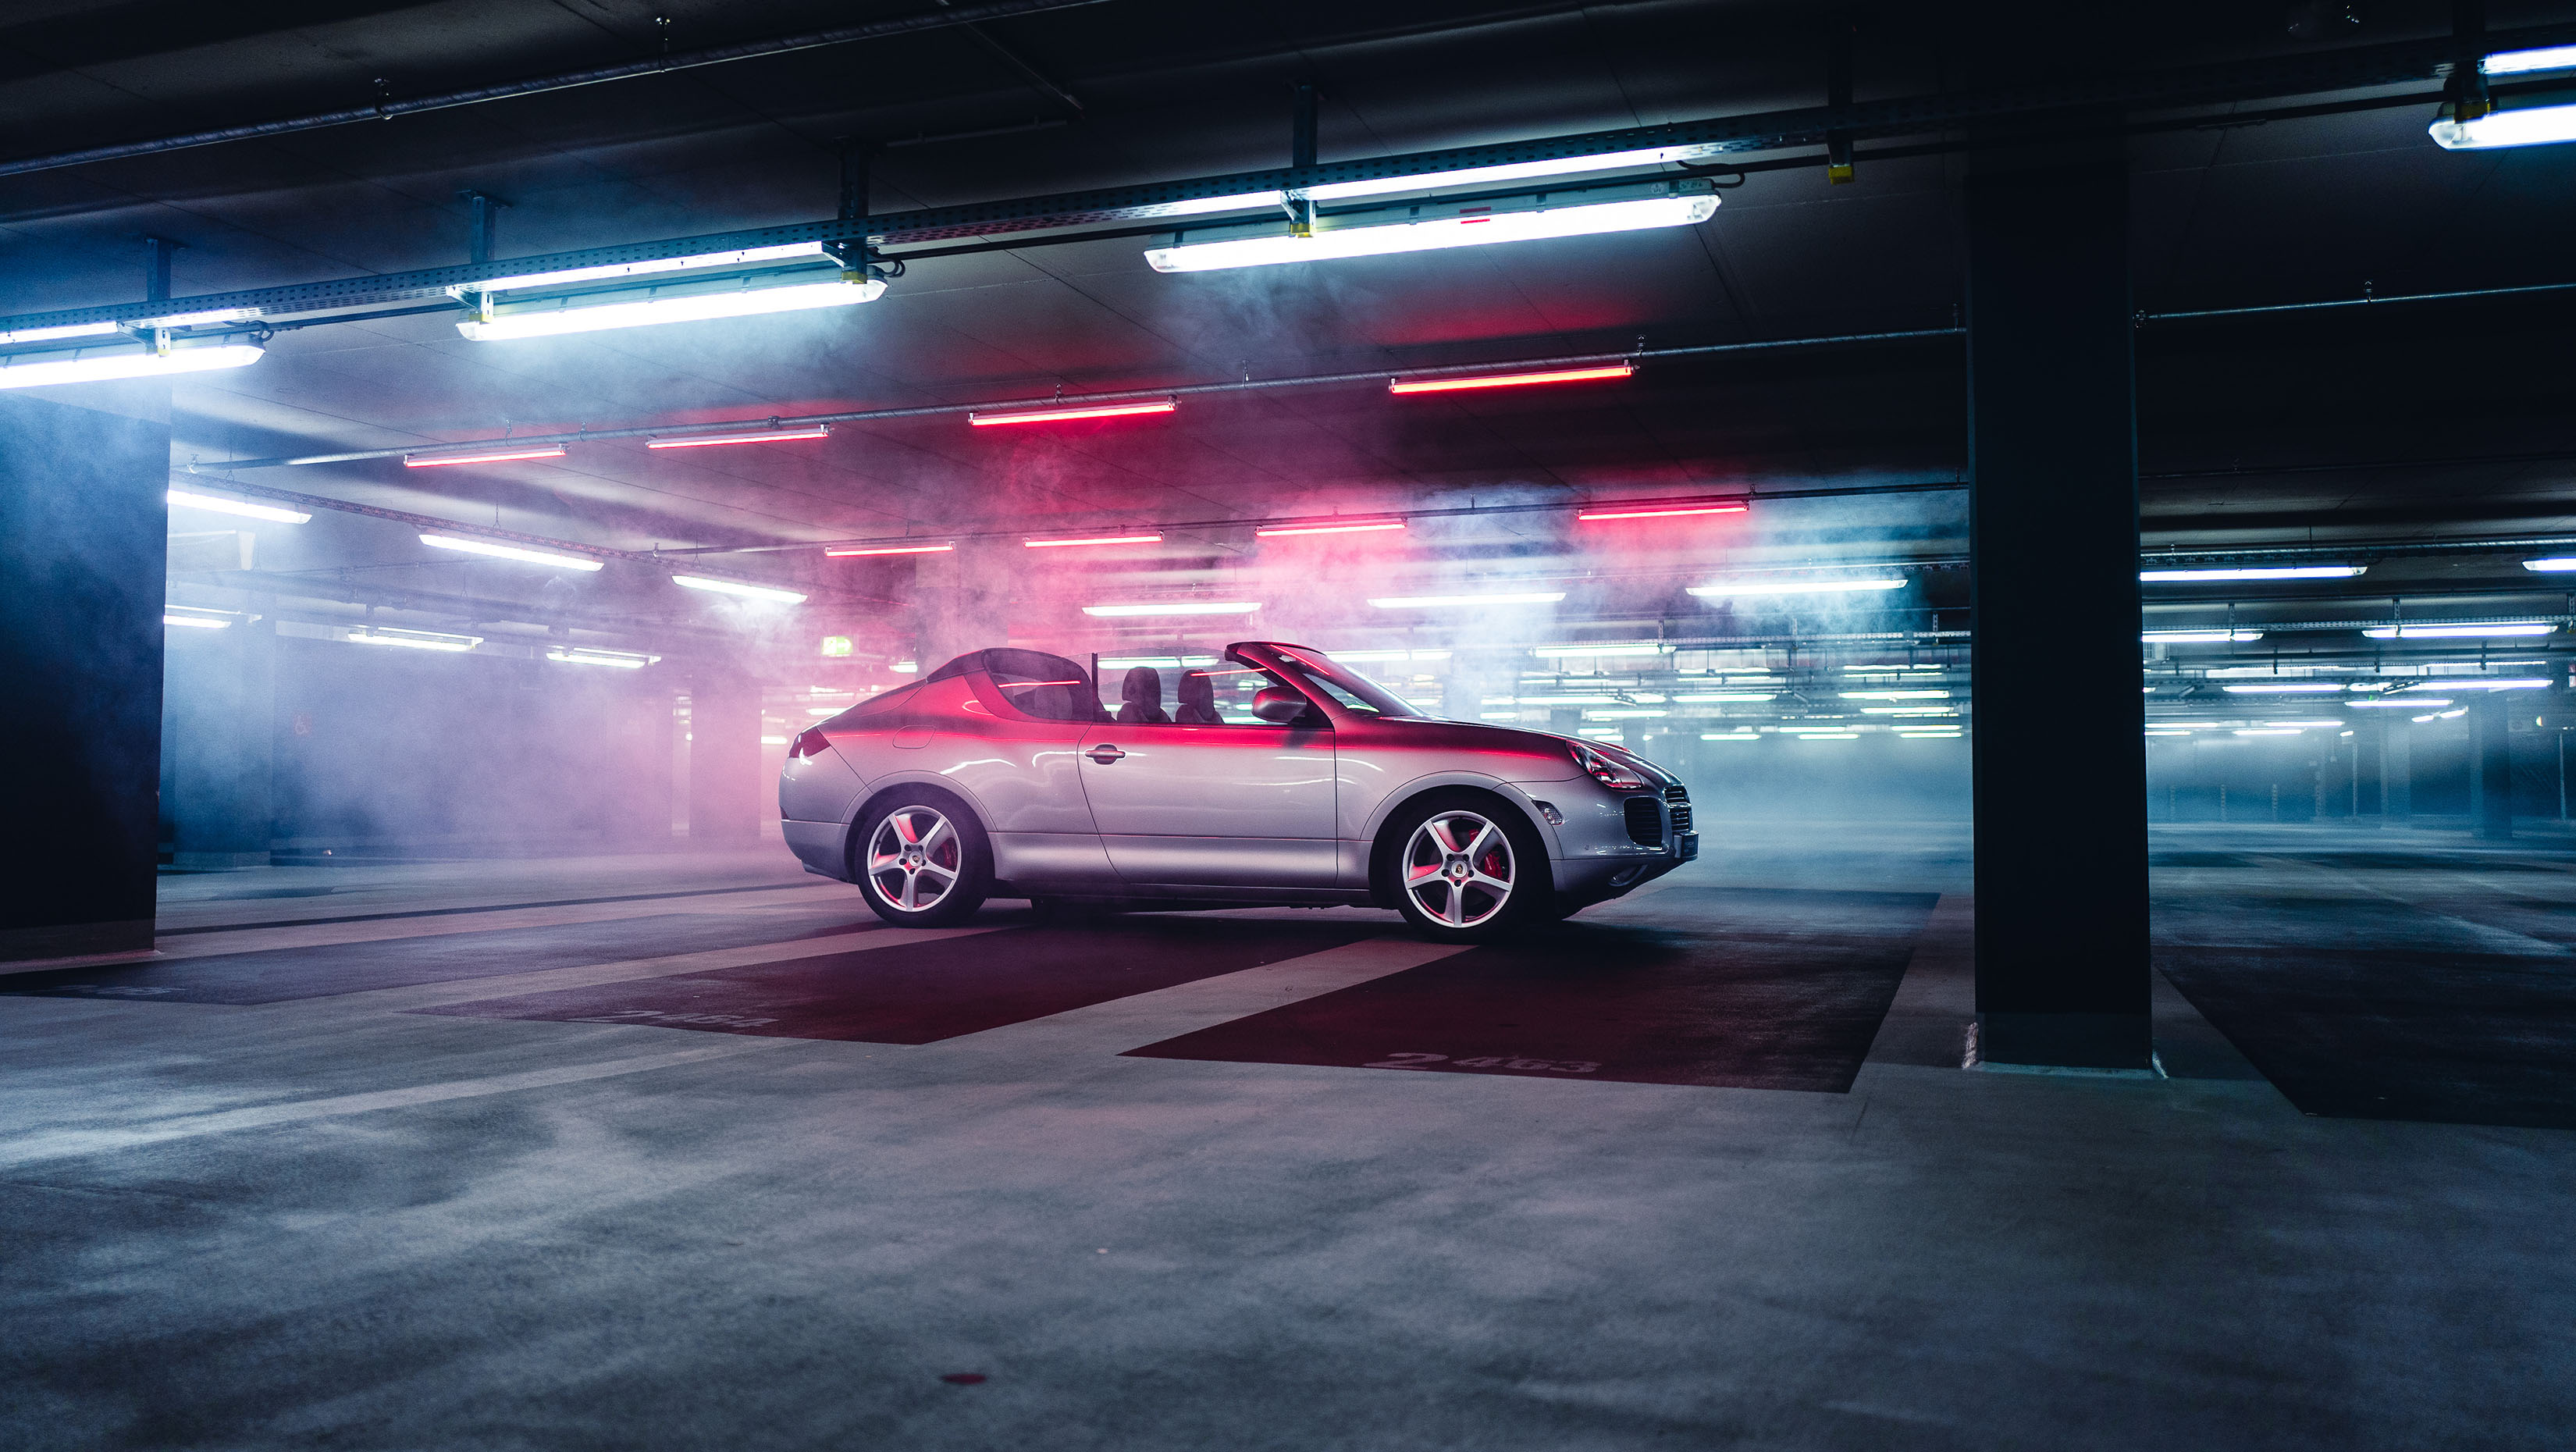 A Cayenne convertible concept car pictured in an underground garage